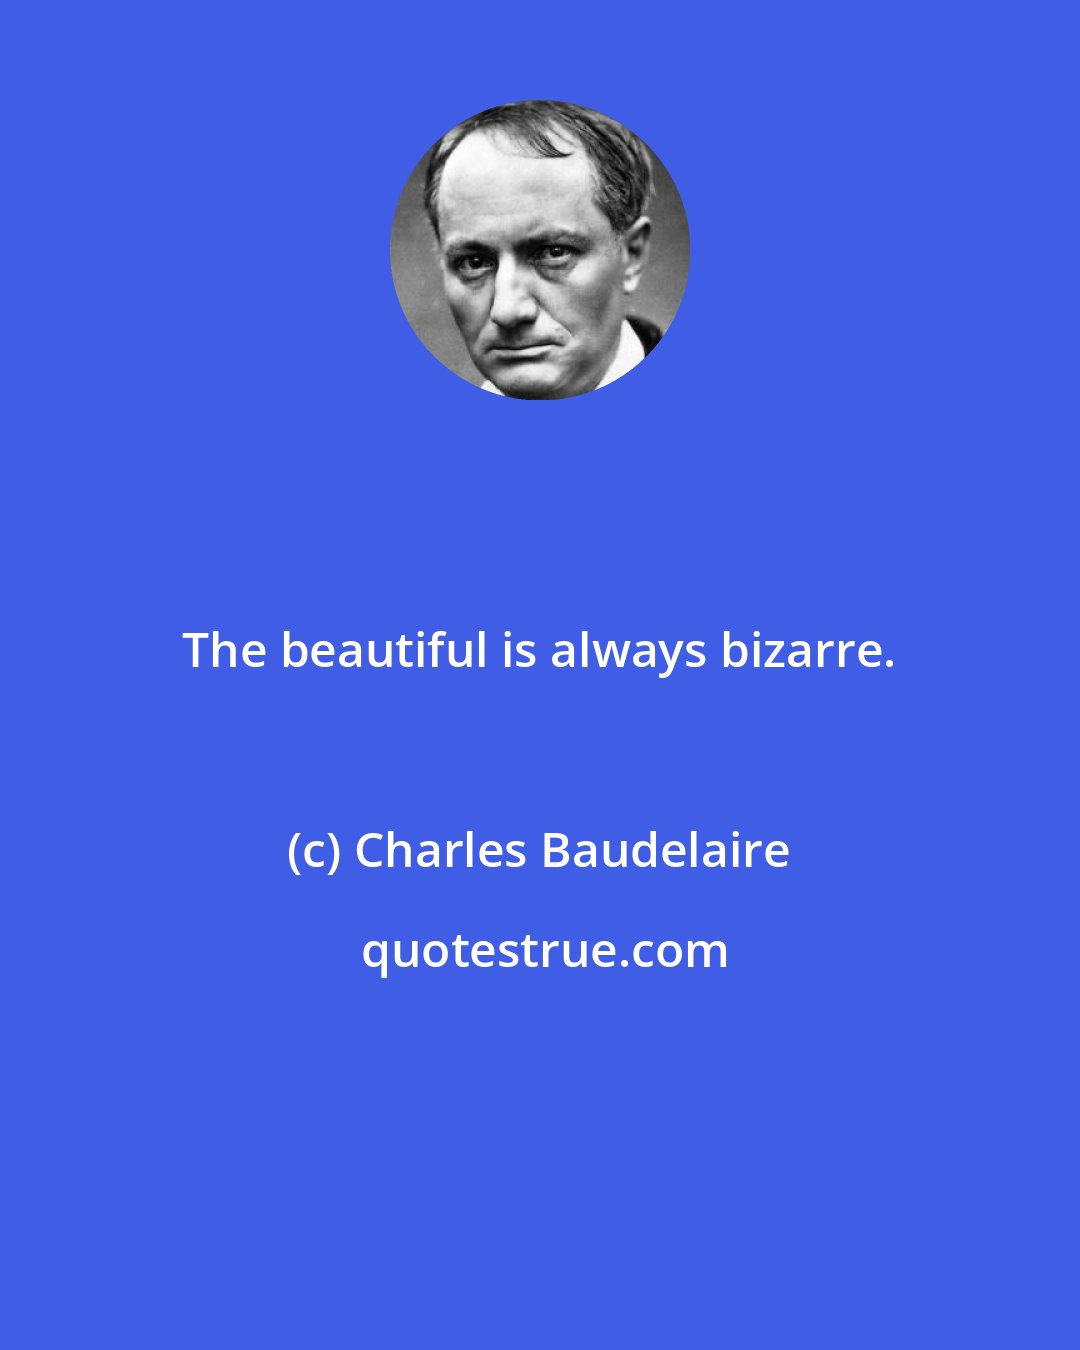 Charles Baudelaire: The beautiful is always bizarre.